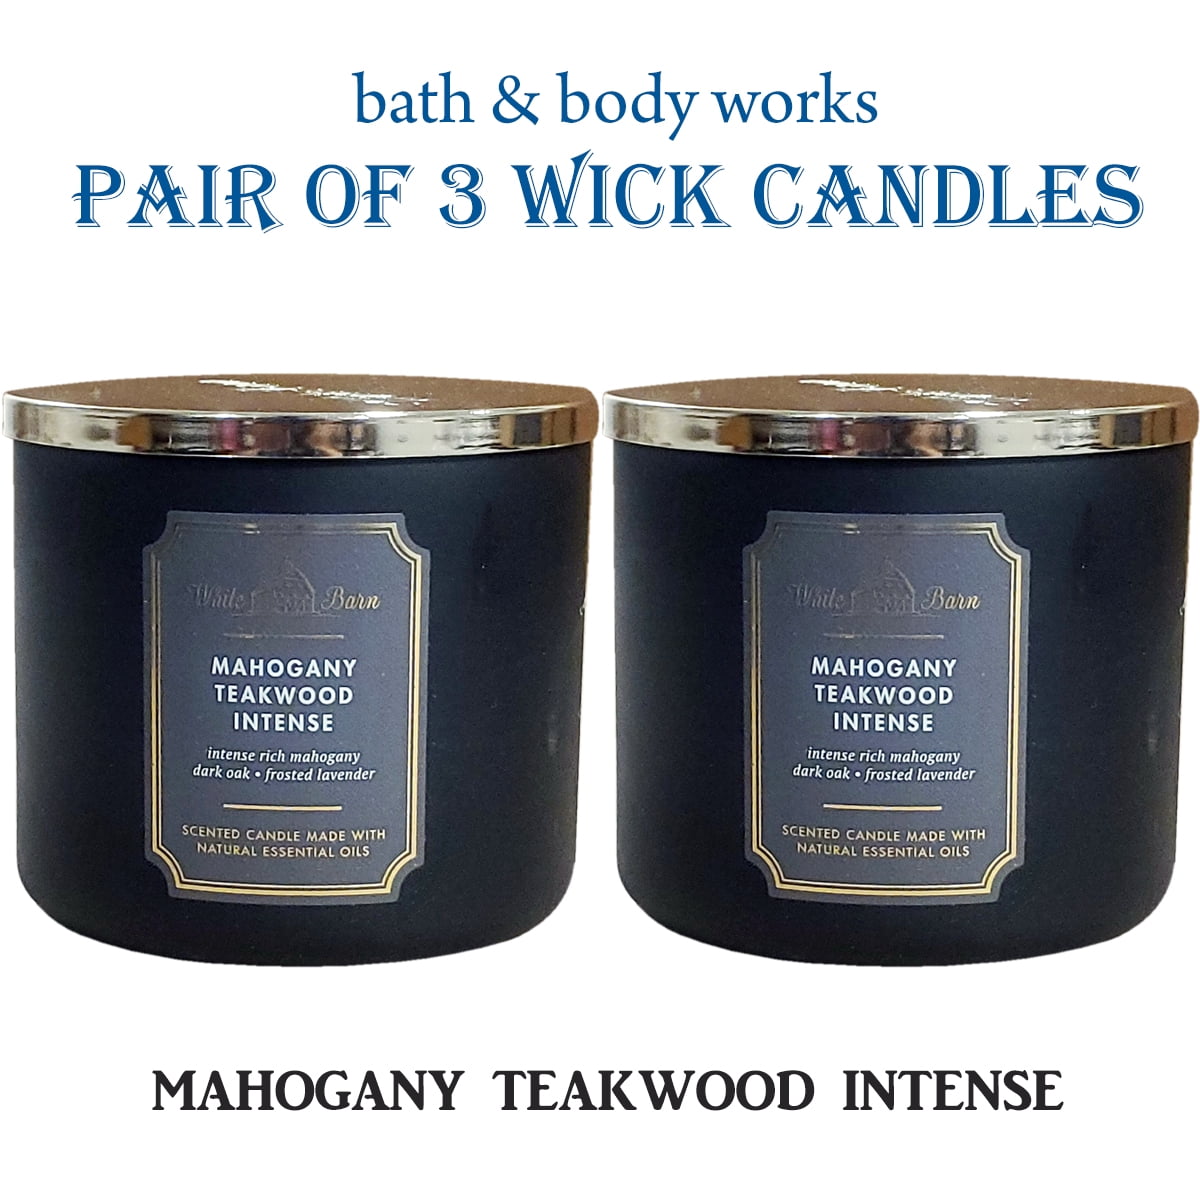 2 Bath & Body Works MAHOGANY TEAKWOOD High Intensity Large 3 Wick Candle  14.5 oz